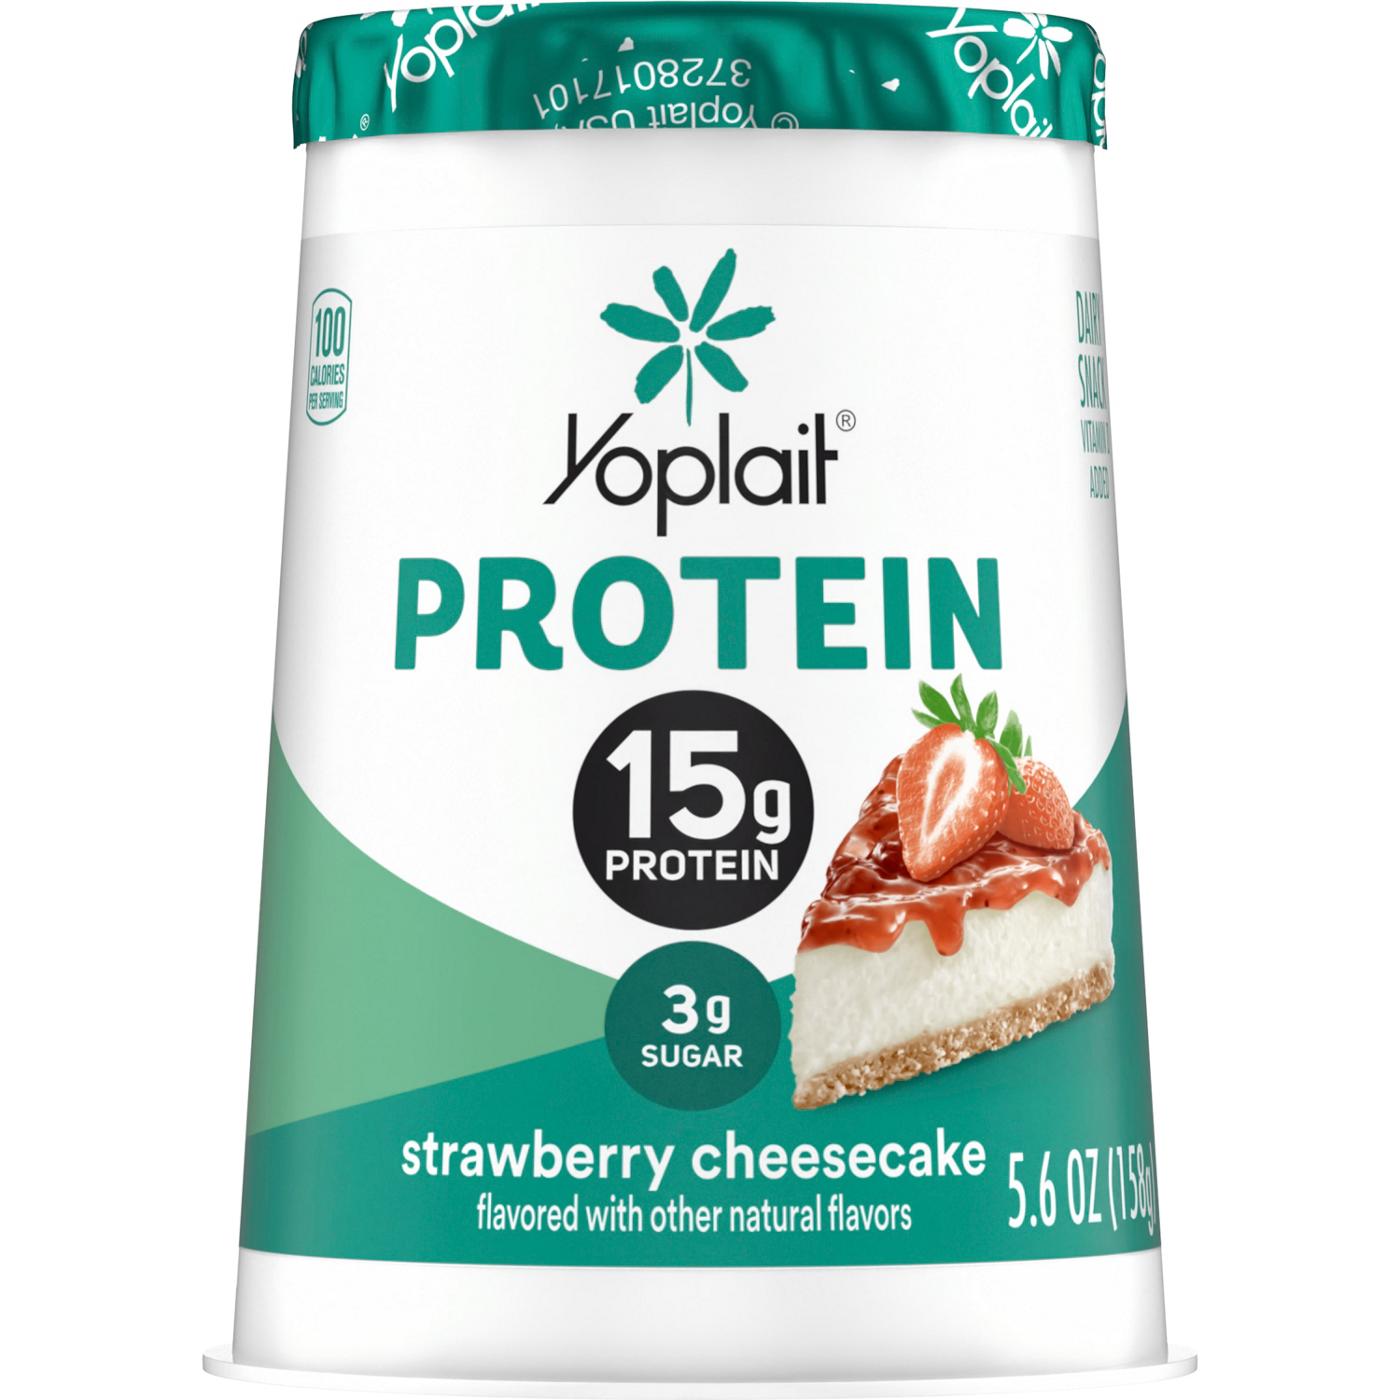 Yoplait 15g Protein Strawberry Cheesecake Yogurt; image 1 of 4